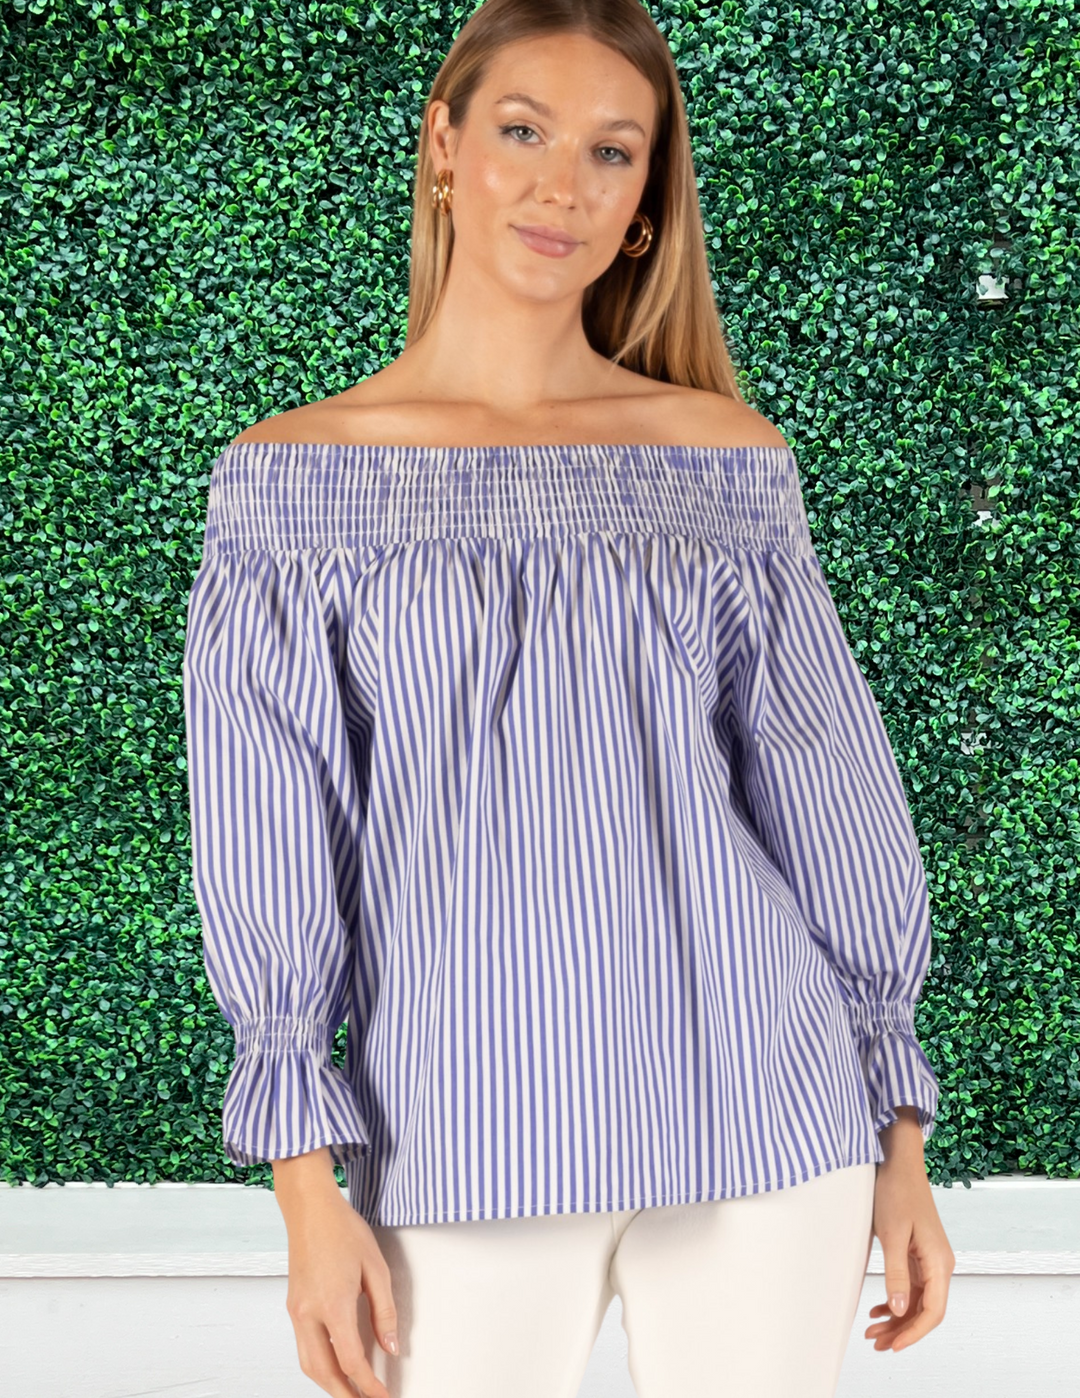 cotton blouse off the shoulder blue and white vertical stripes trendy online boutique